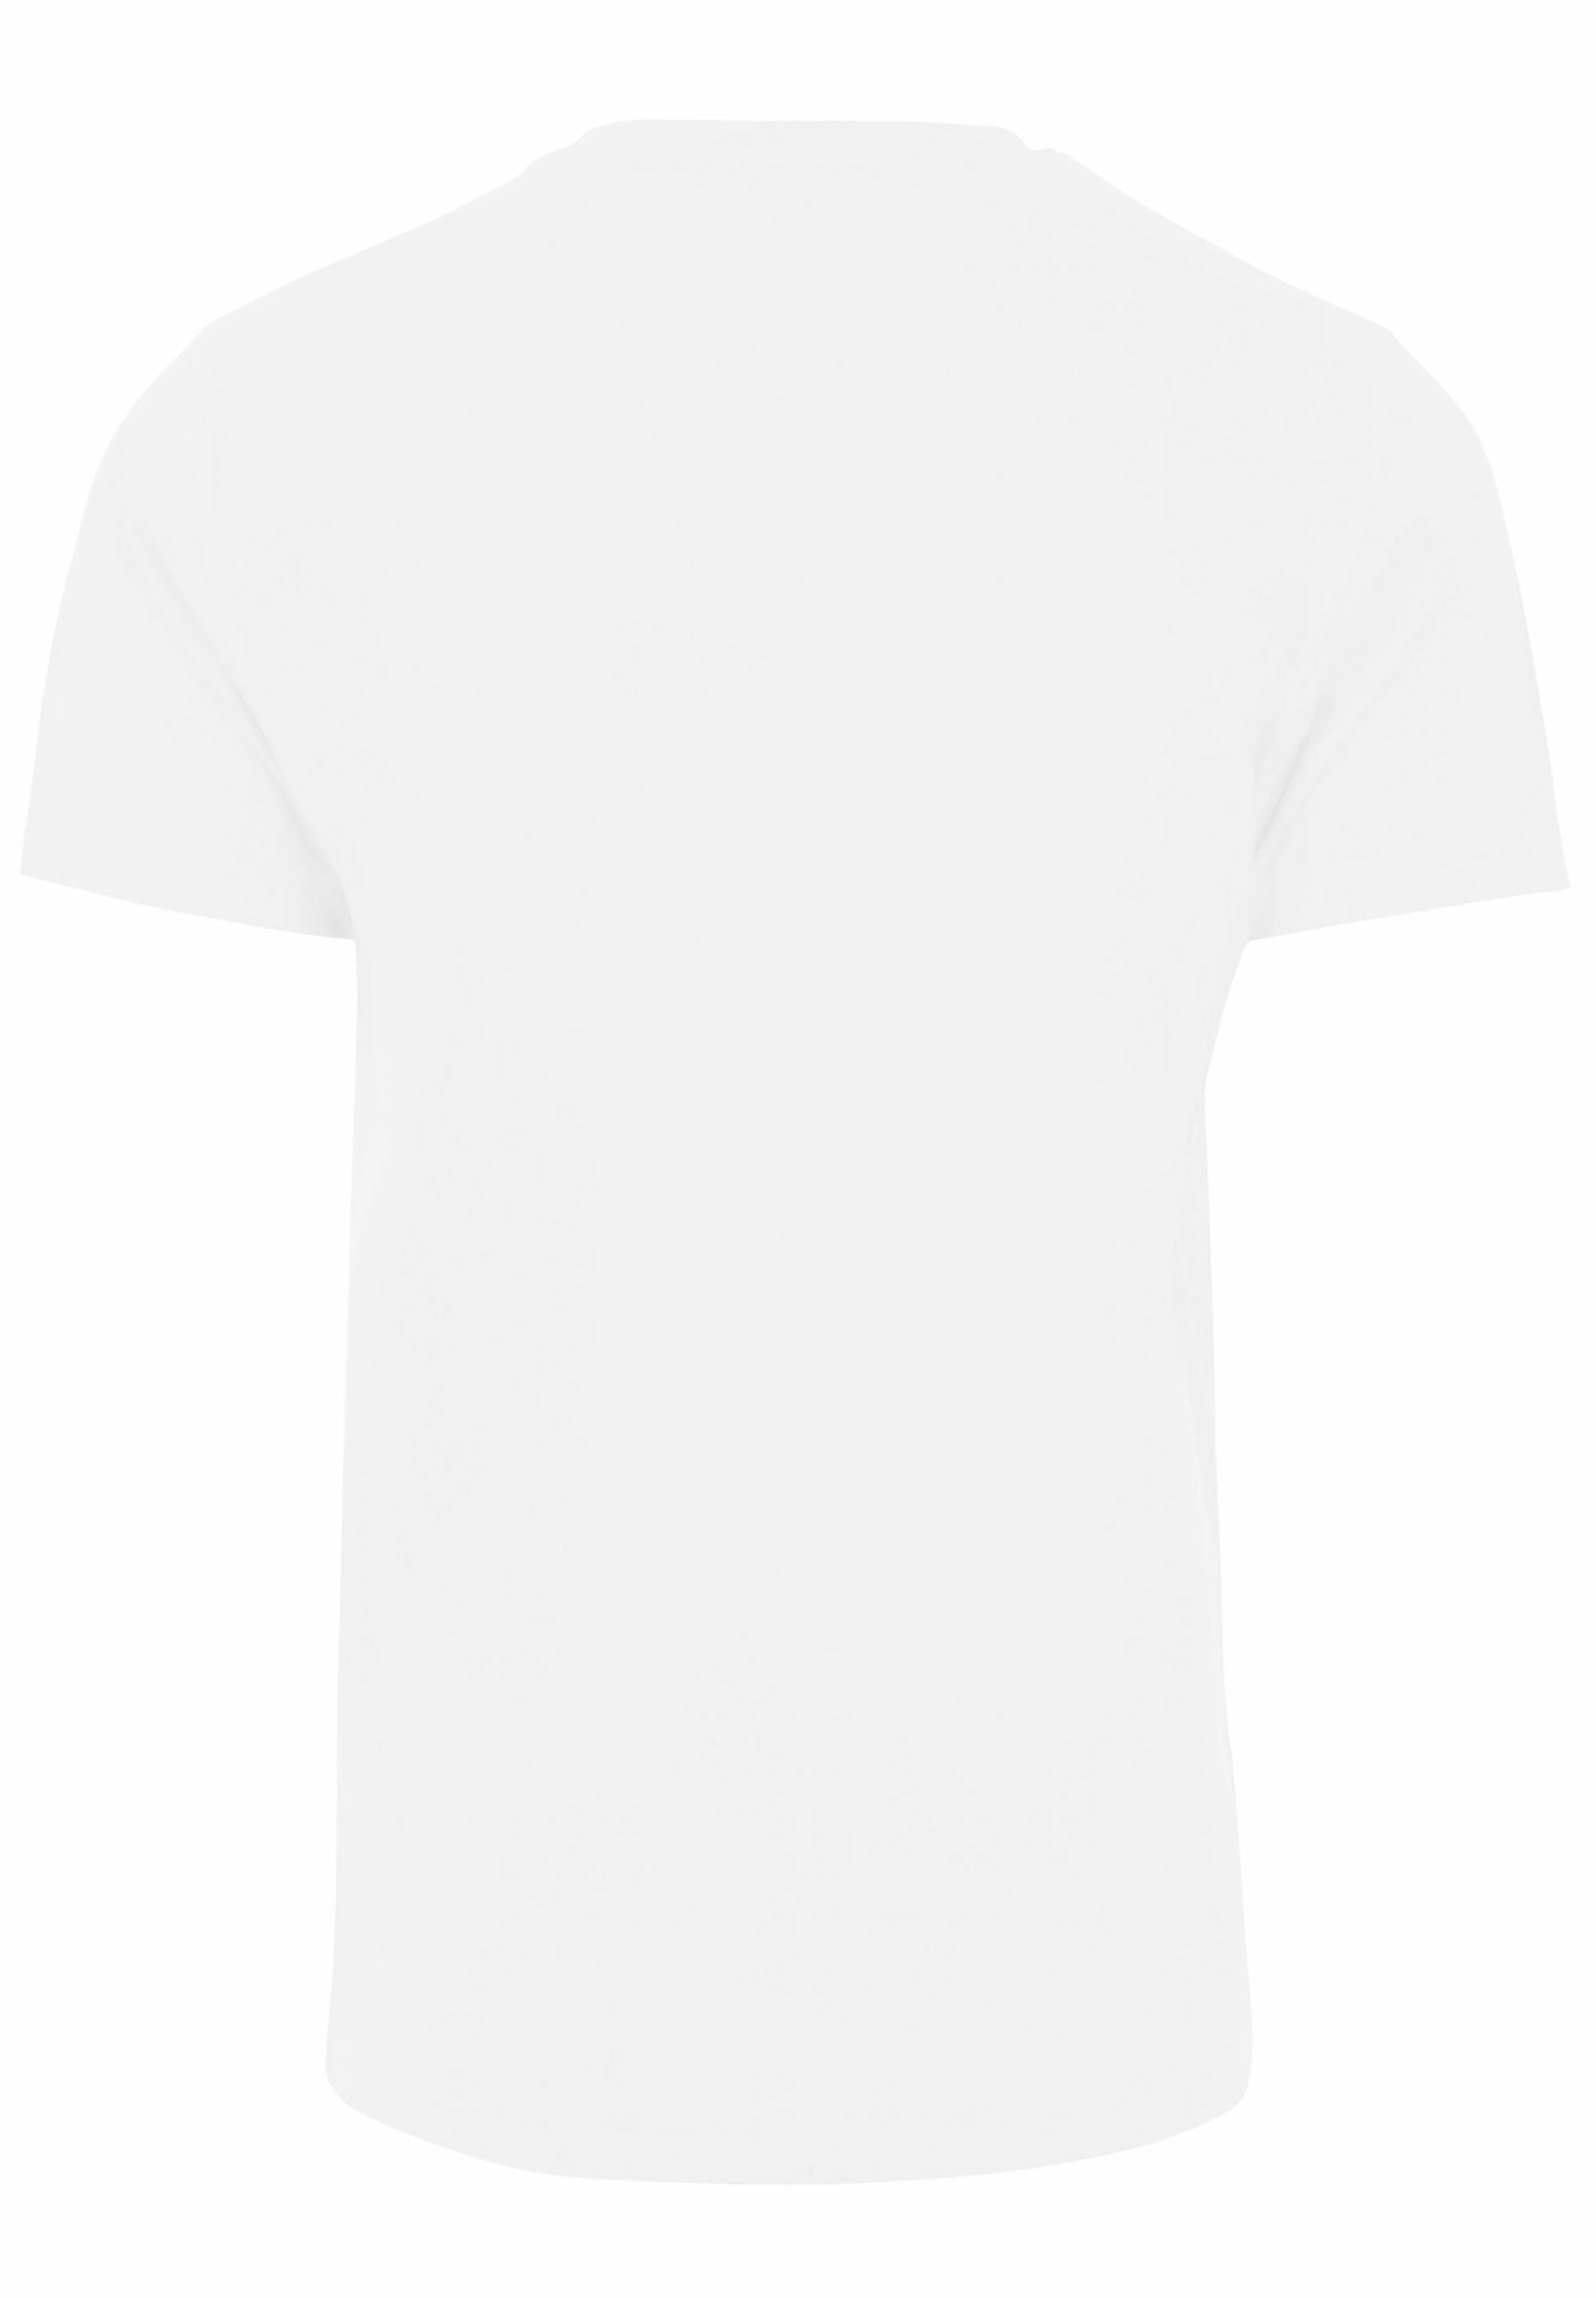 F4NT4STIC T-Shirt Schwammkopf Spongebob WHATEVER Merch,Regular-Fit,Basic,Bedruckt Herren,Premium weiß